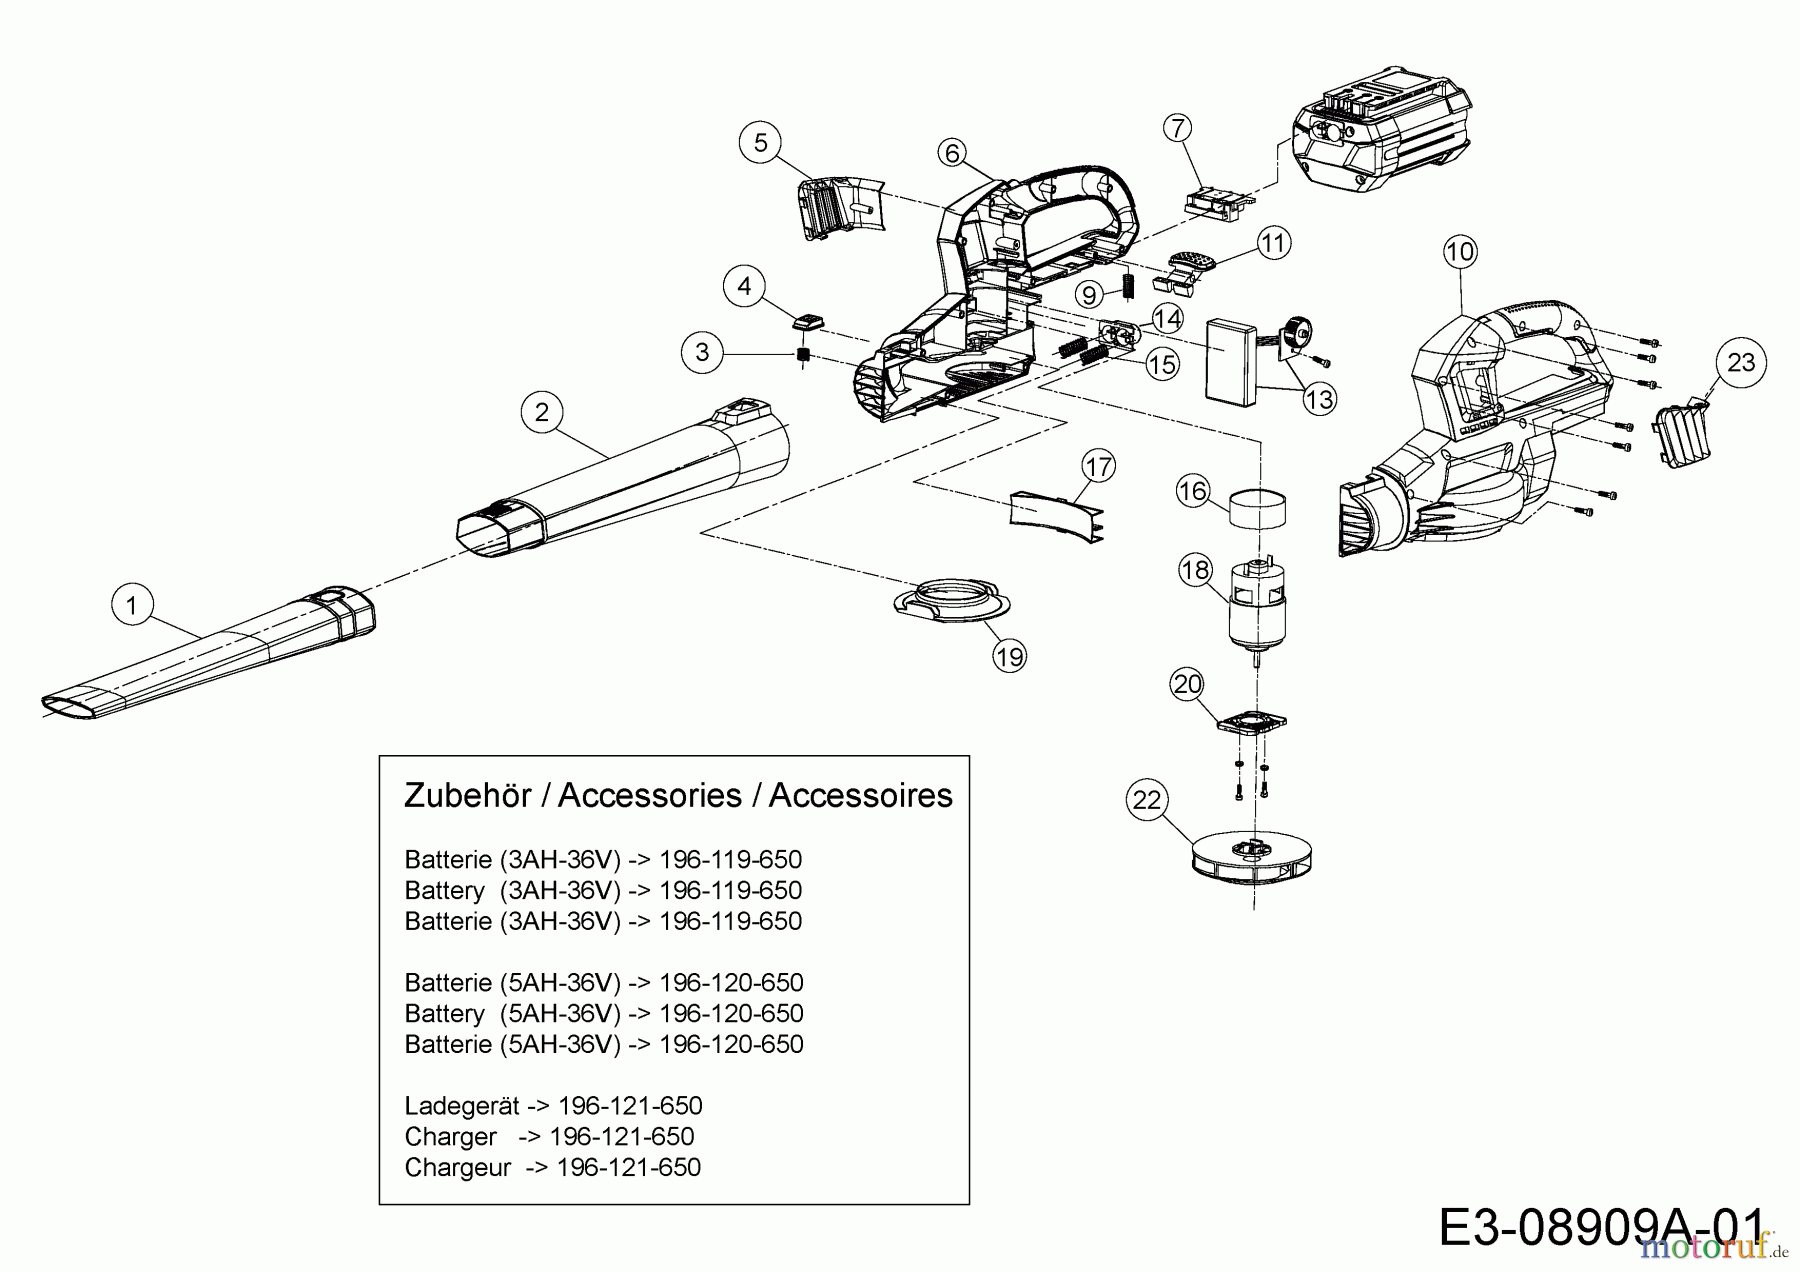  Wolf-Garten Akkulaubbläser Li-Ion Power LBB 36 41AJLCBC650  (2016) Grundgerät